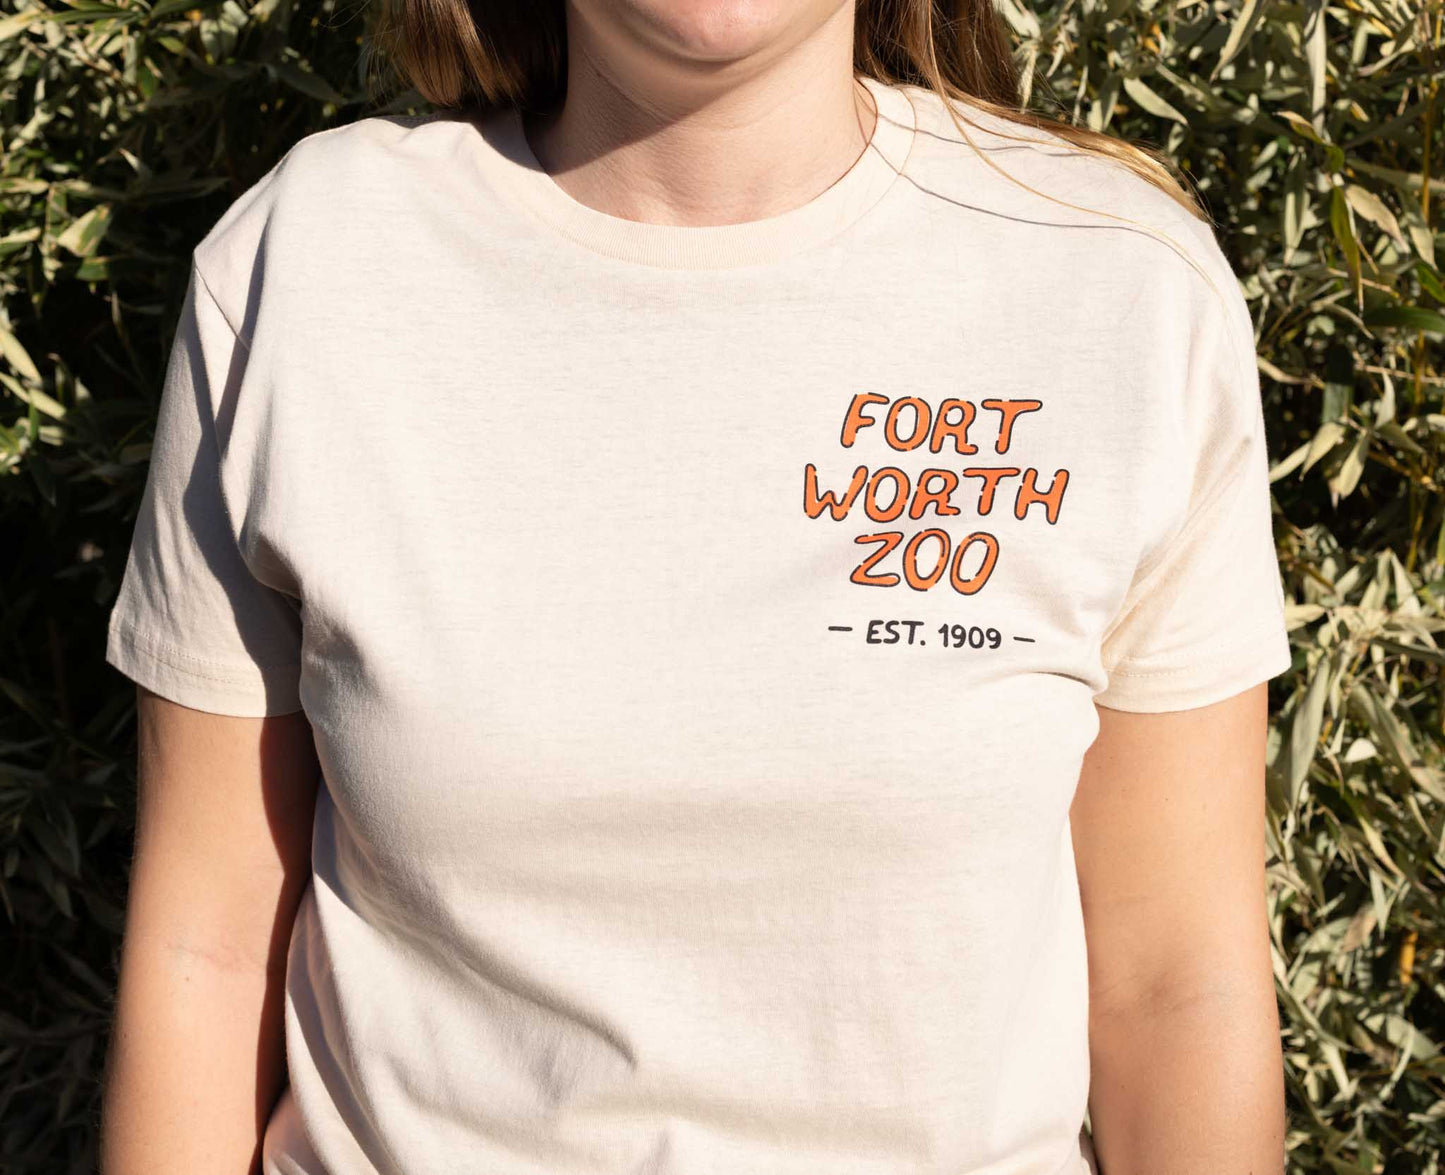 World of Primates T-Shirt